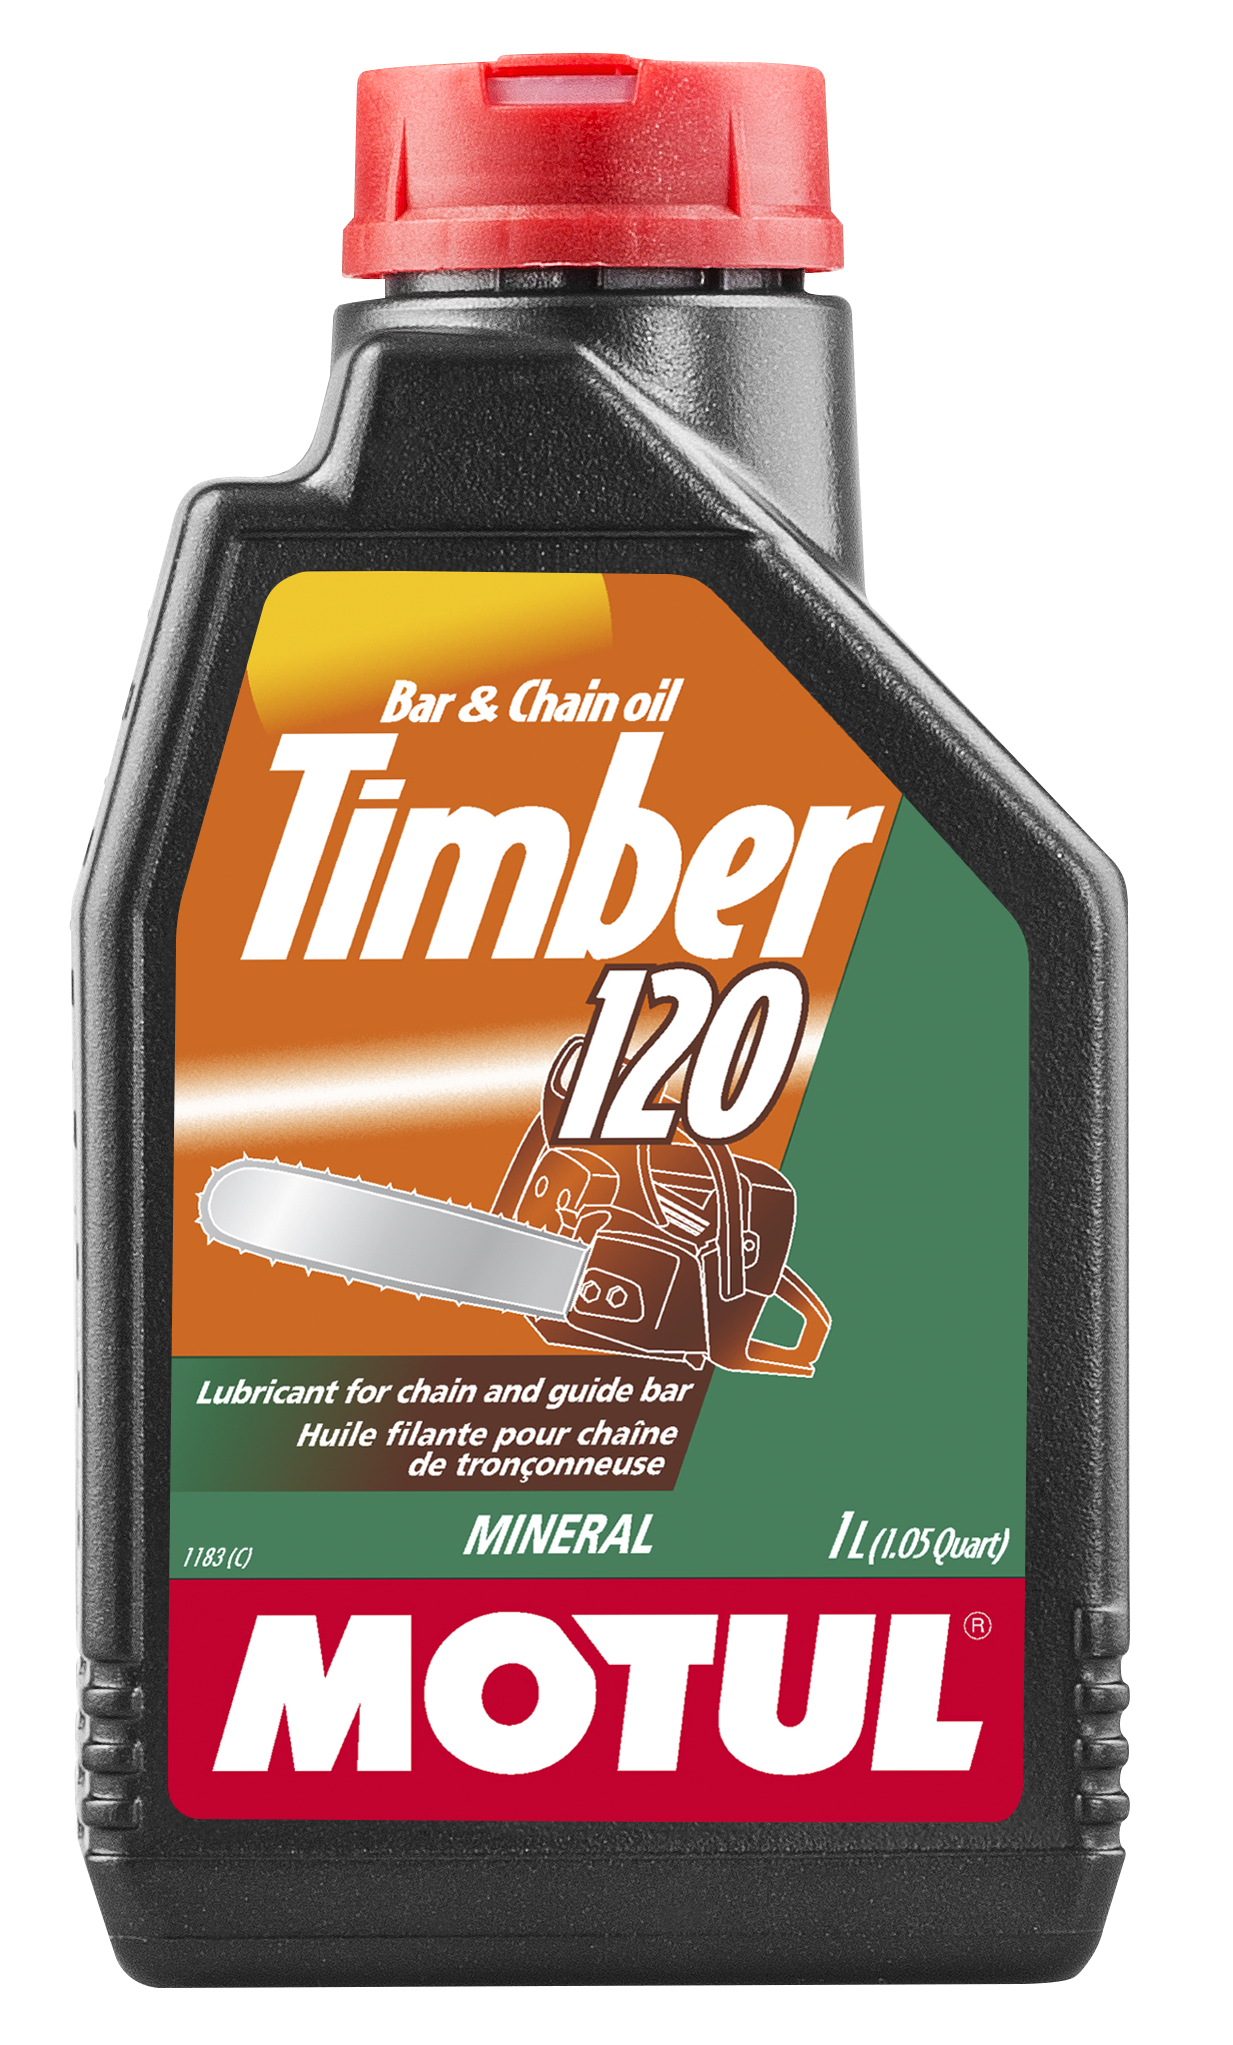 MOTUL Timber SAE 120